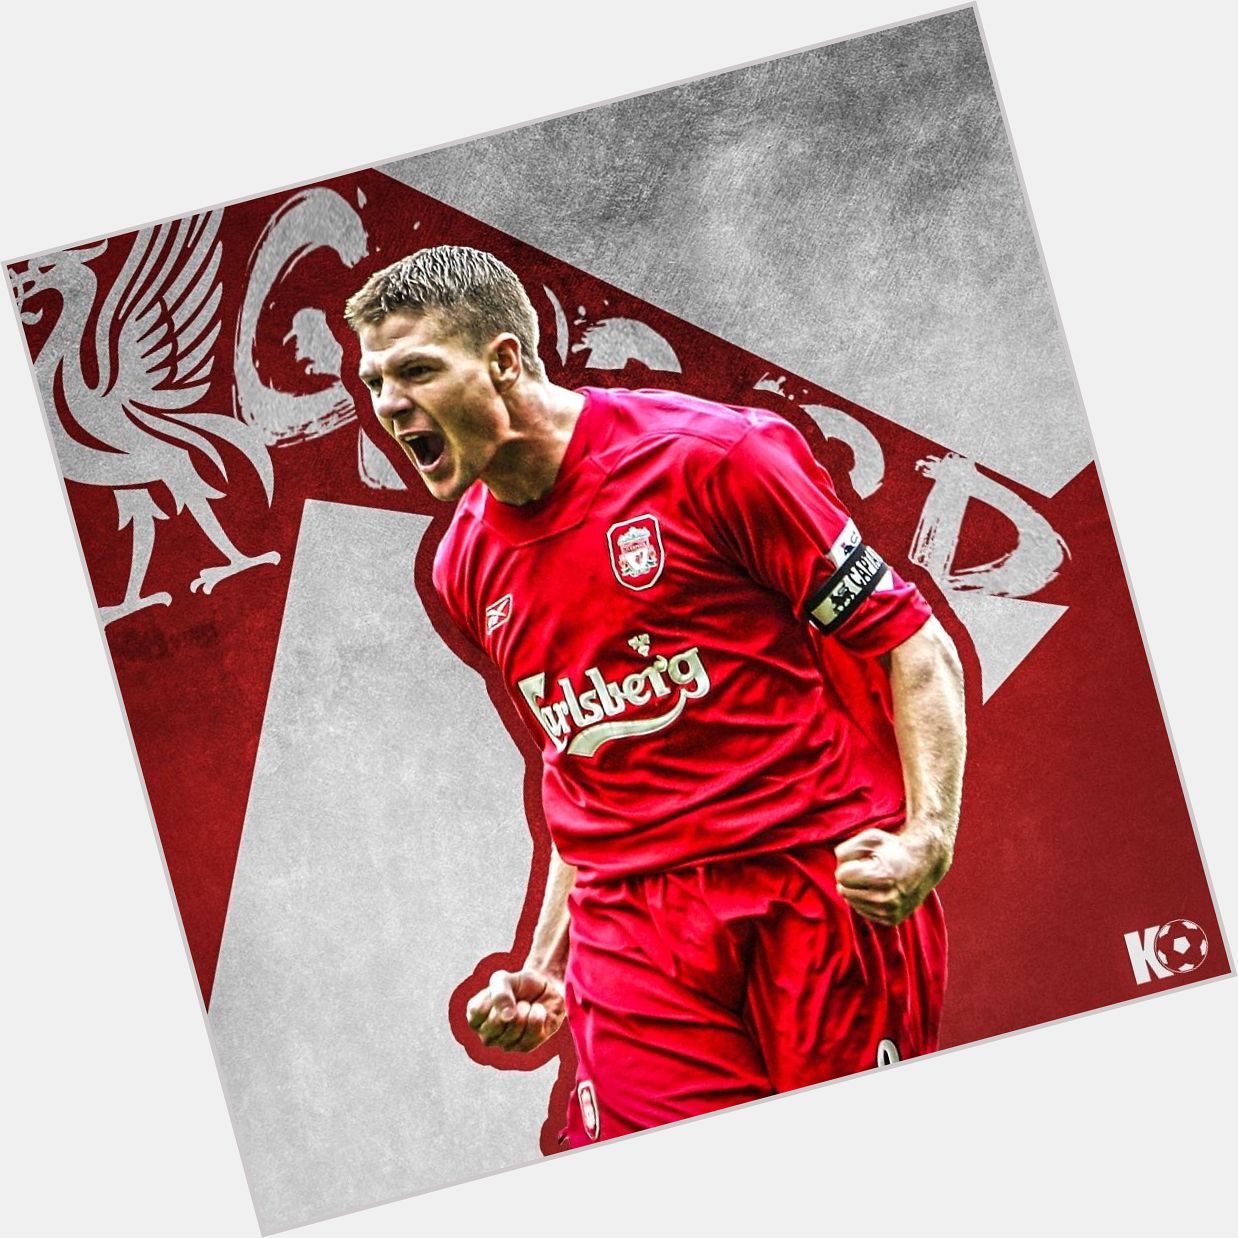 Join in wishing Liverpool legend Steven Gerrard a Happy Birthday! 